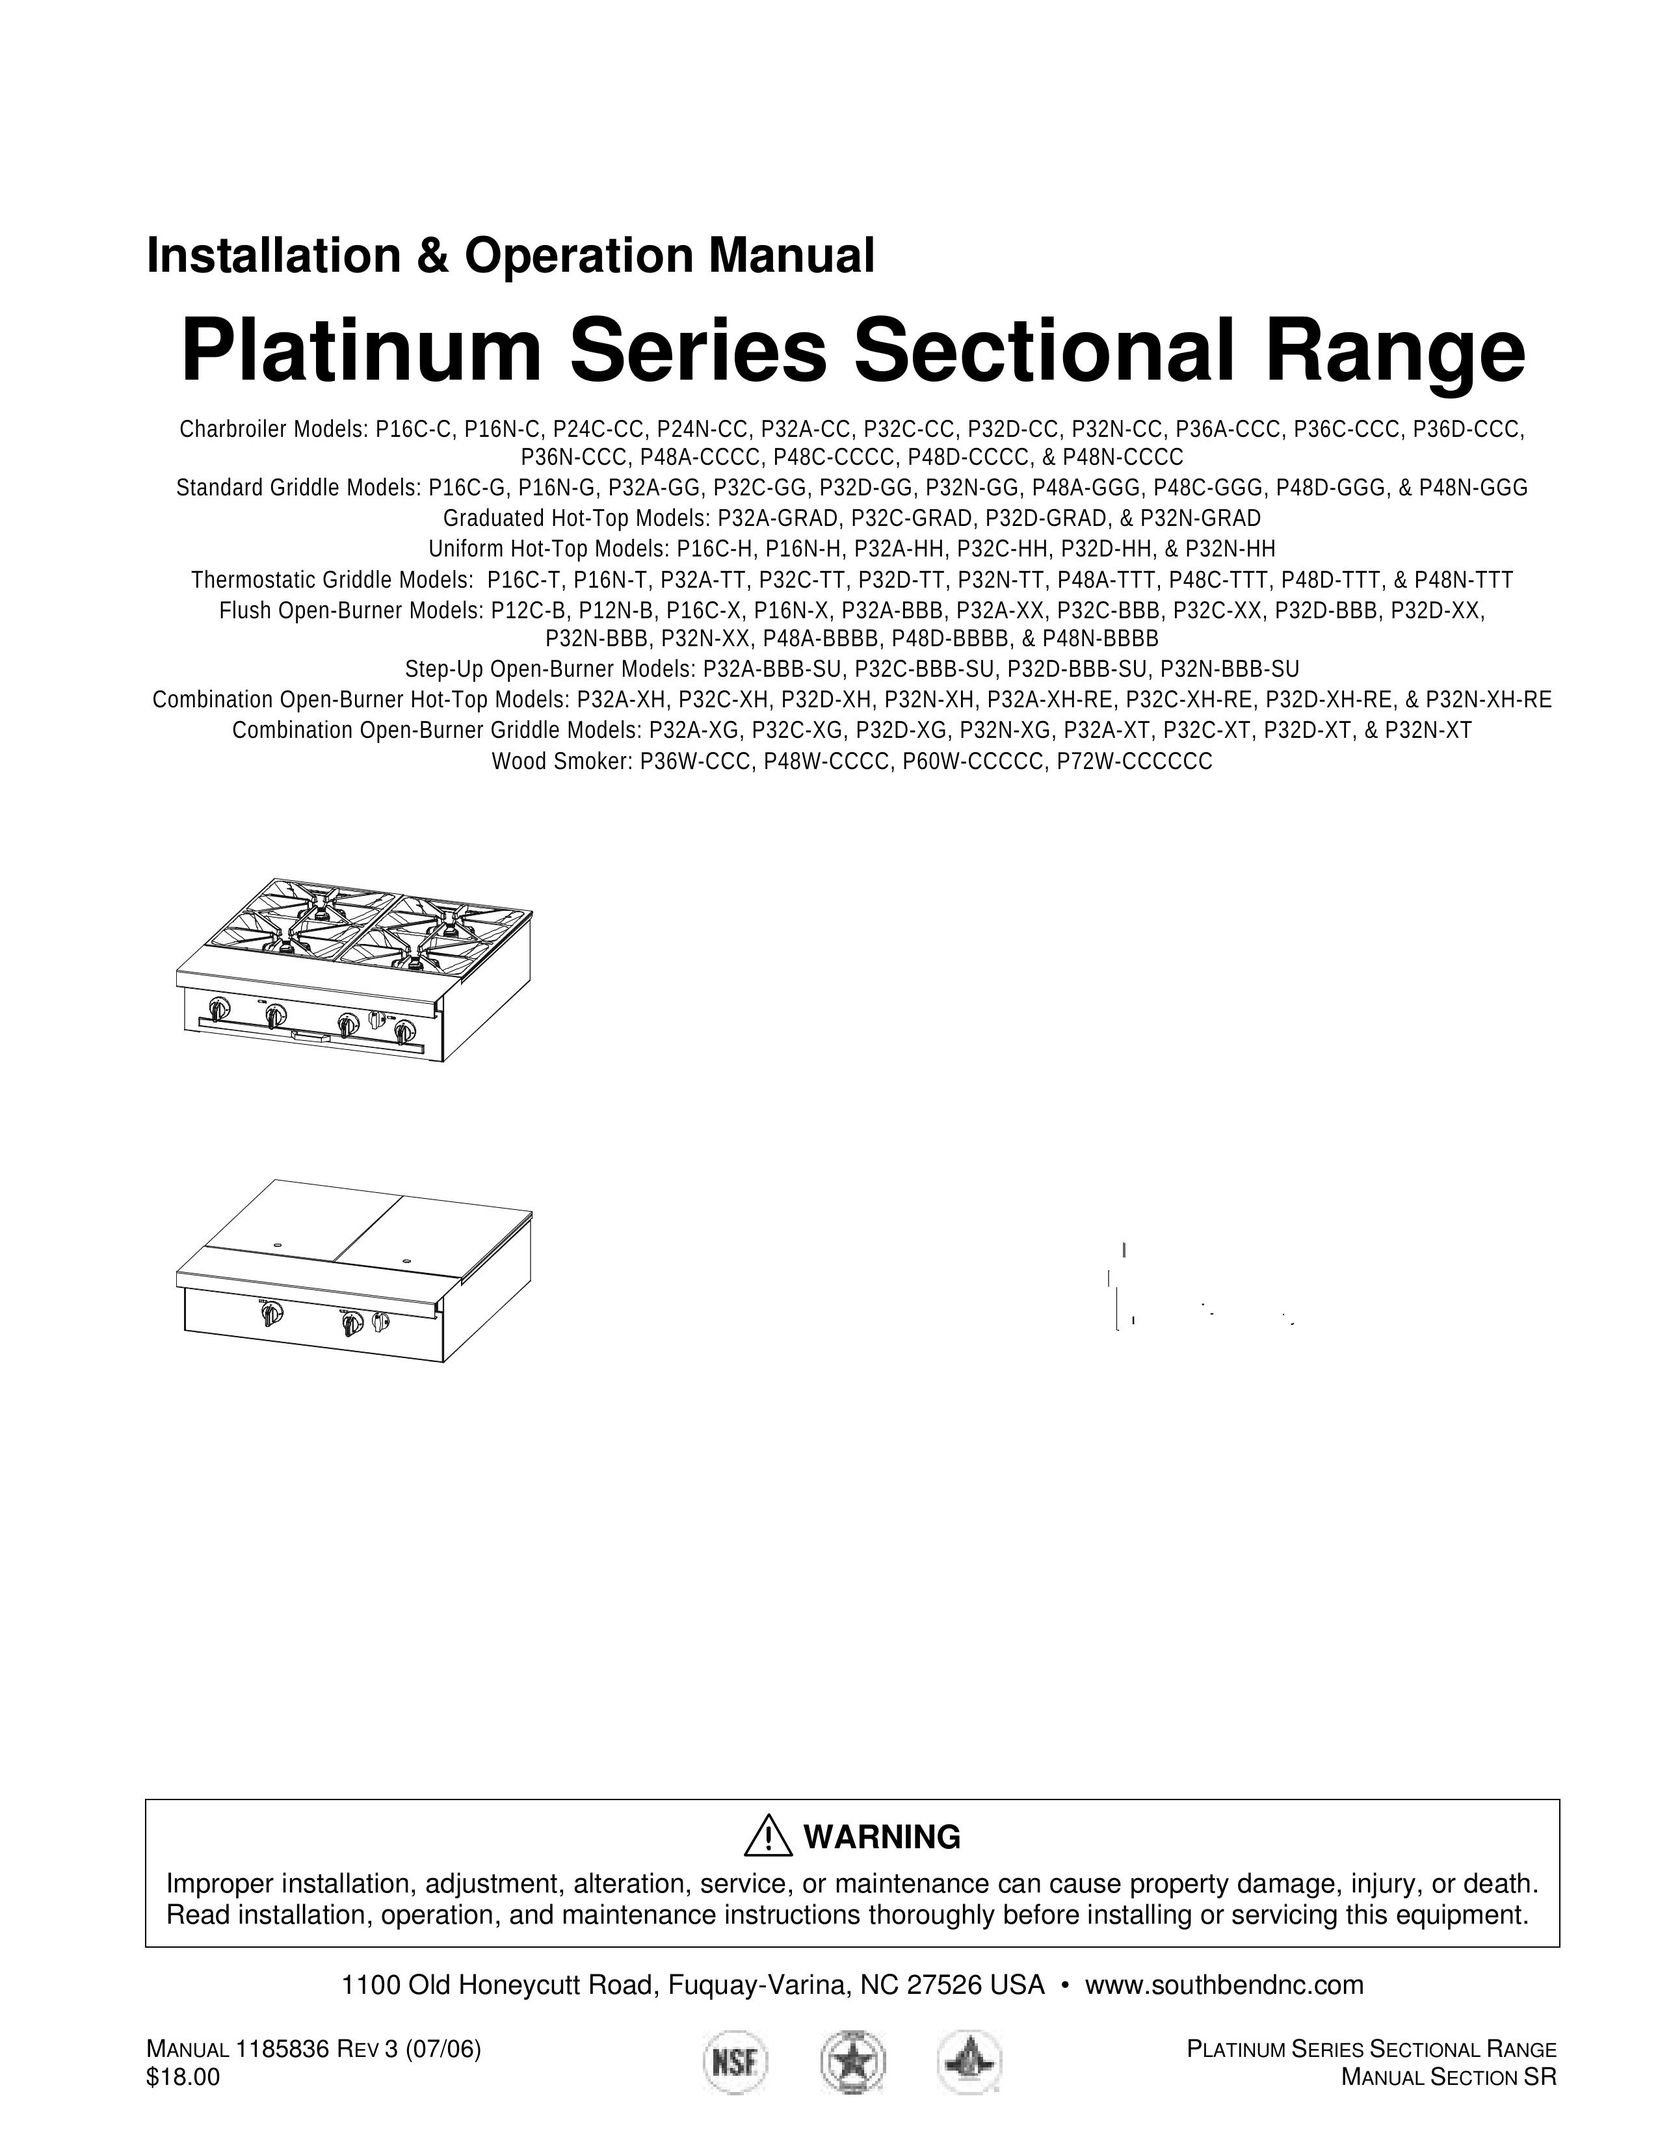 Southbend P16N-G Range User Manual